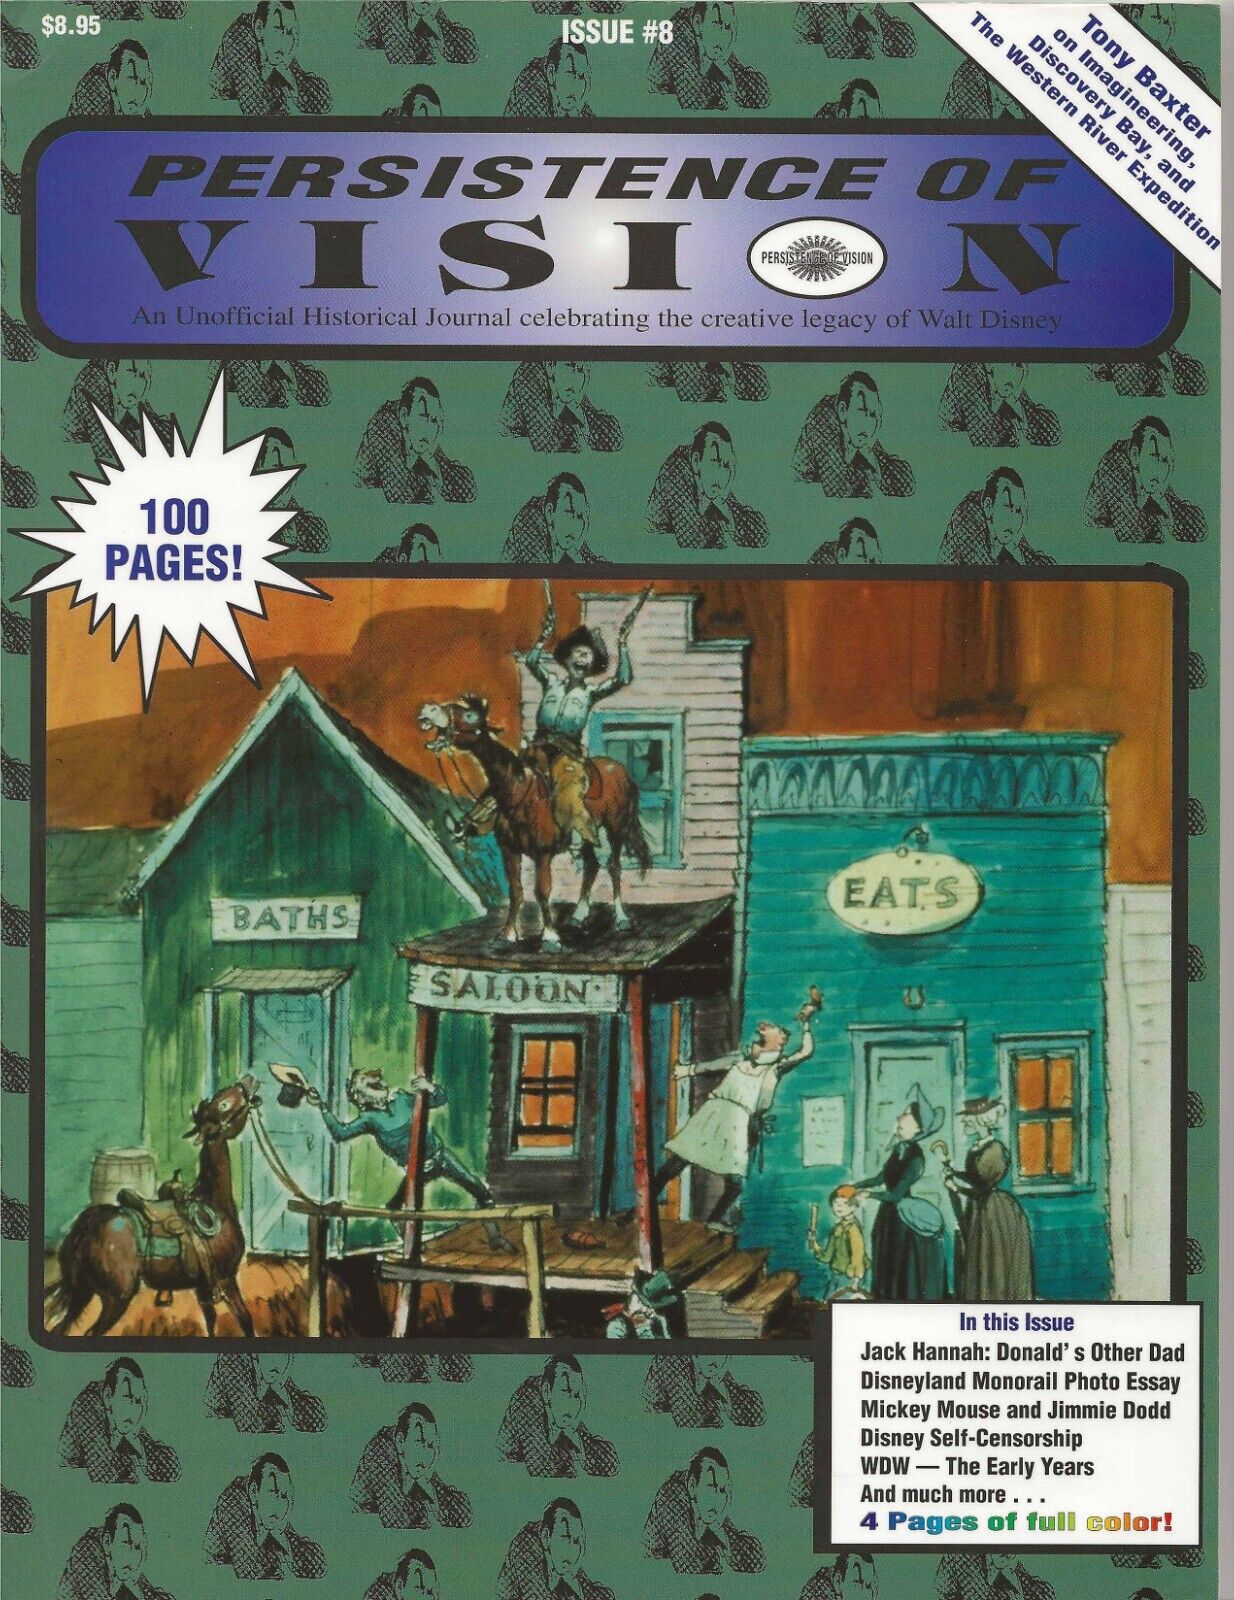 PERSISTENCE OF VISION ISSUE #8 TONY BAXTER ON IMAGNEERING DISNEY JACK HANNAH